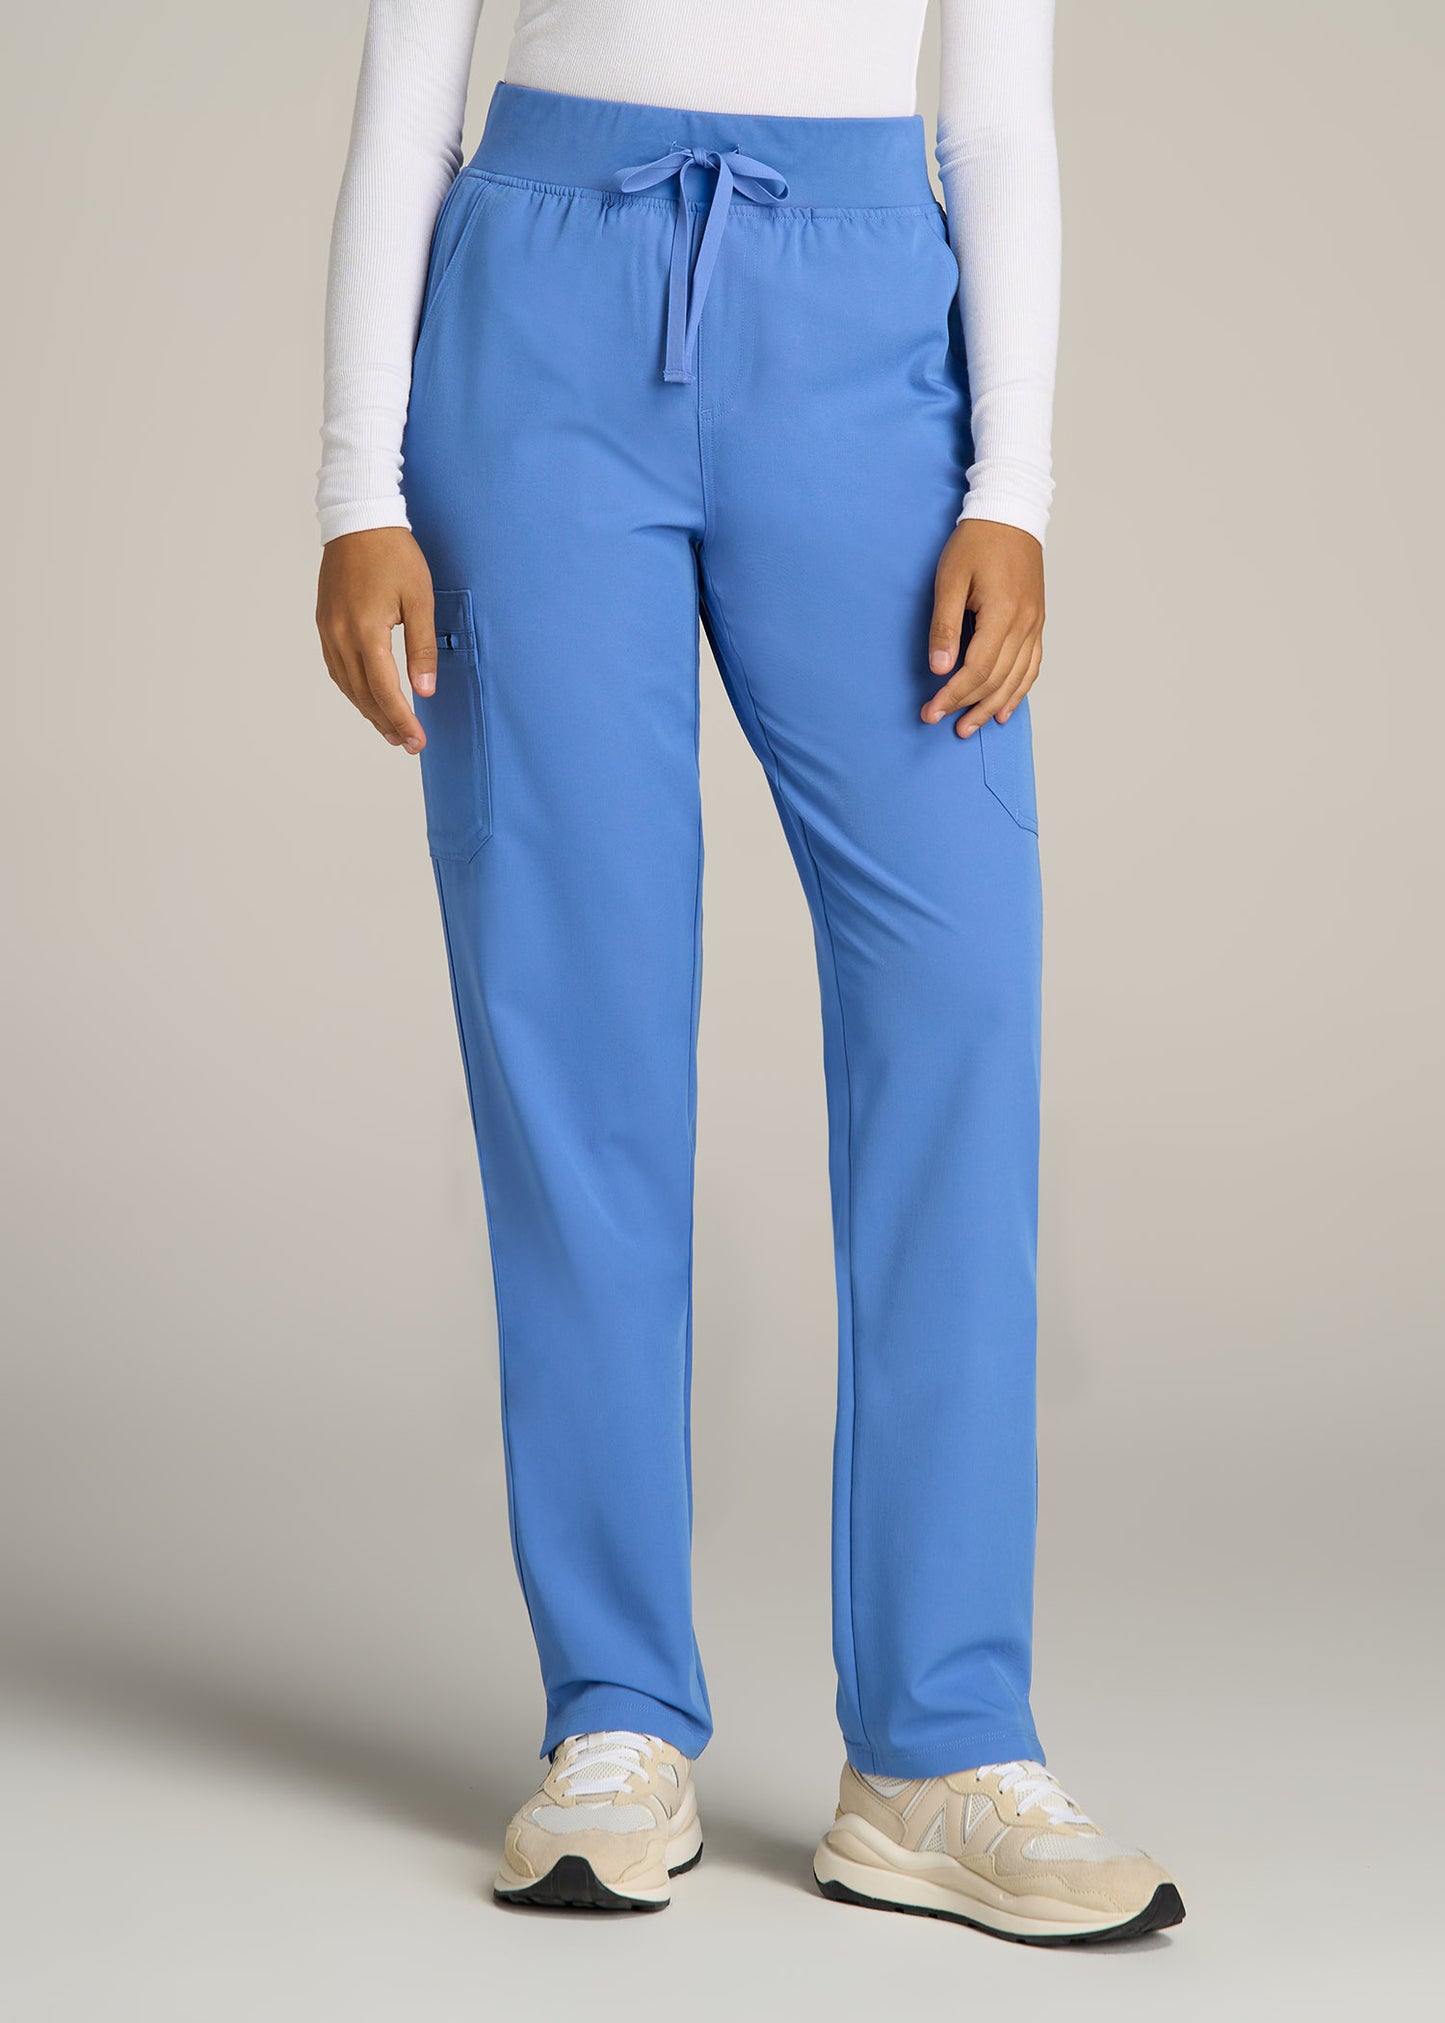 Nike Vapor Select Women's 3/4-Length Softball Pants. Nike.com